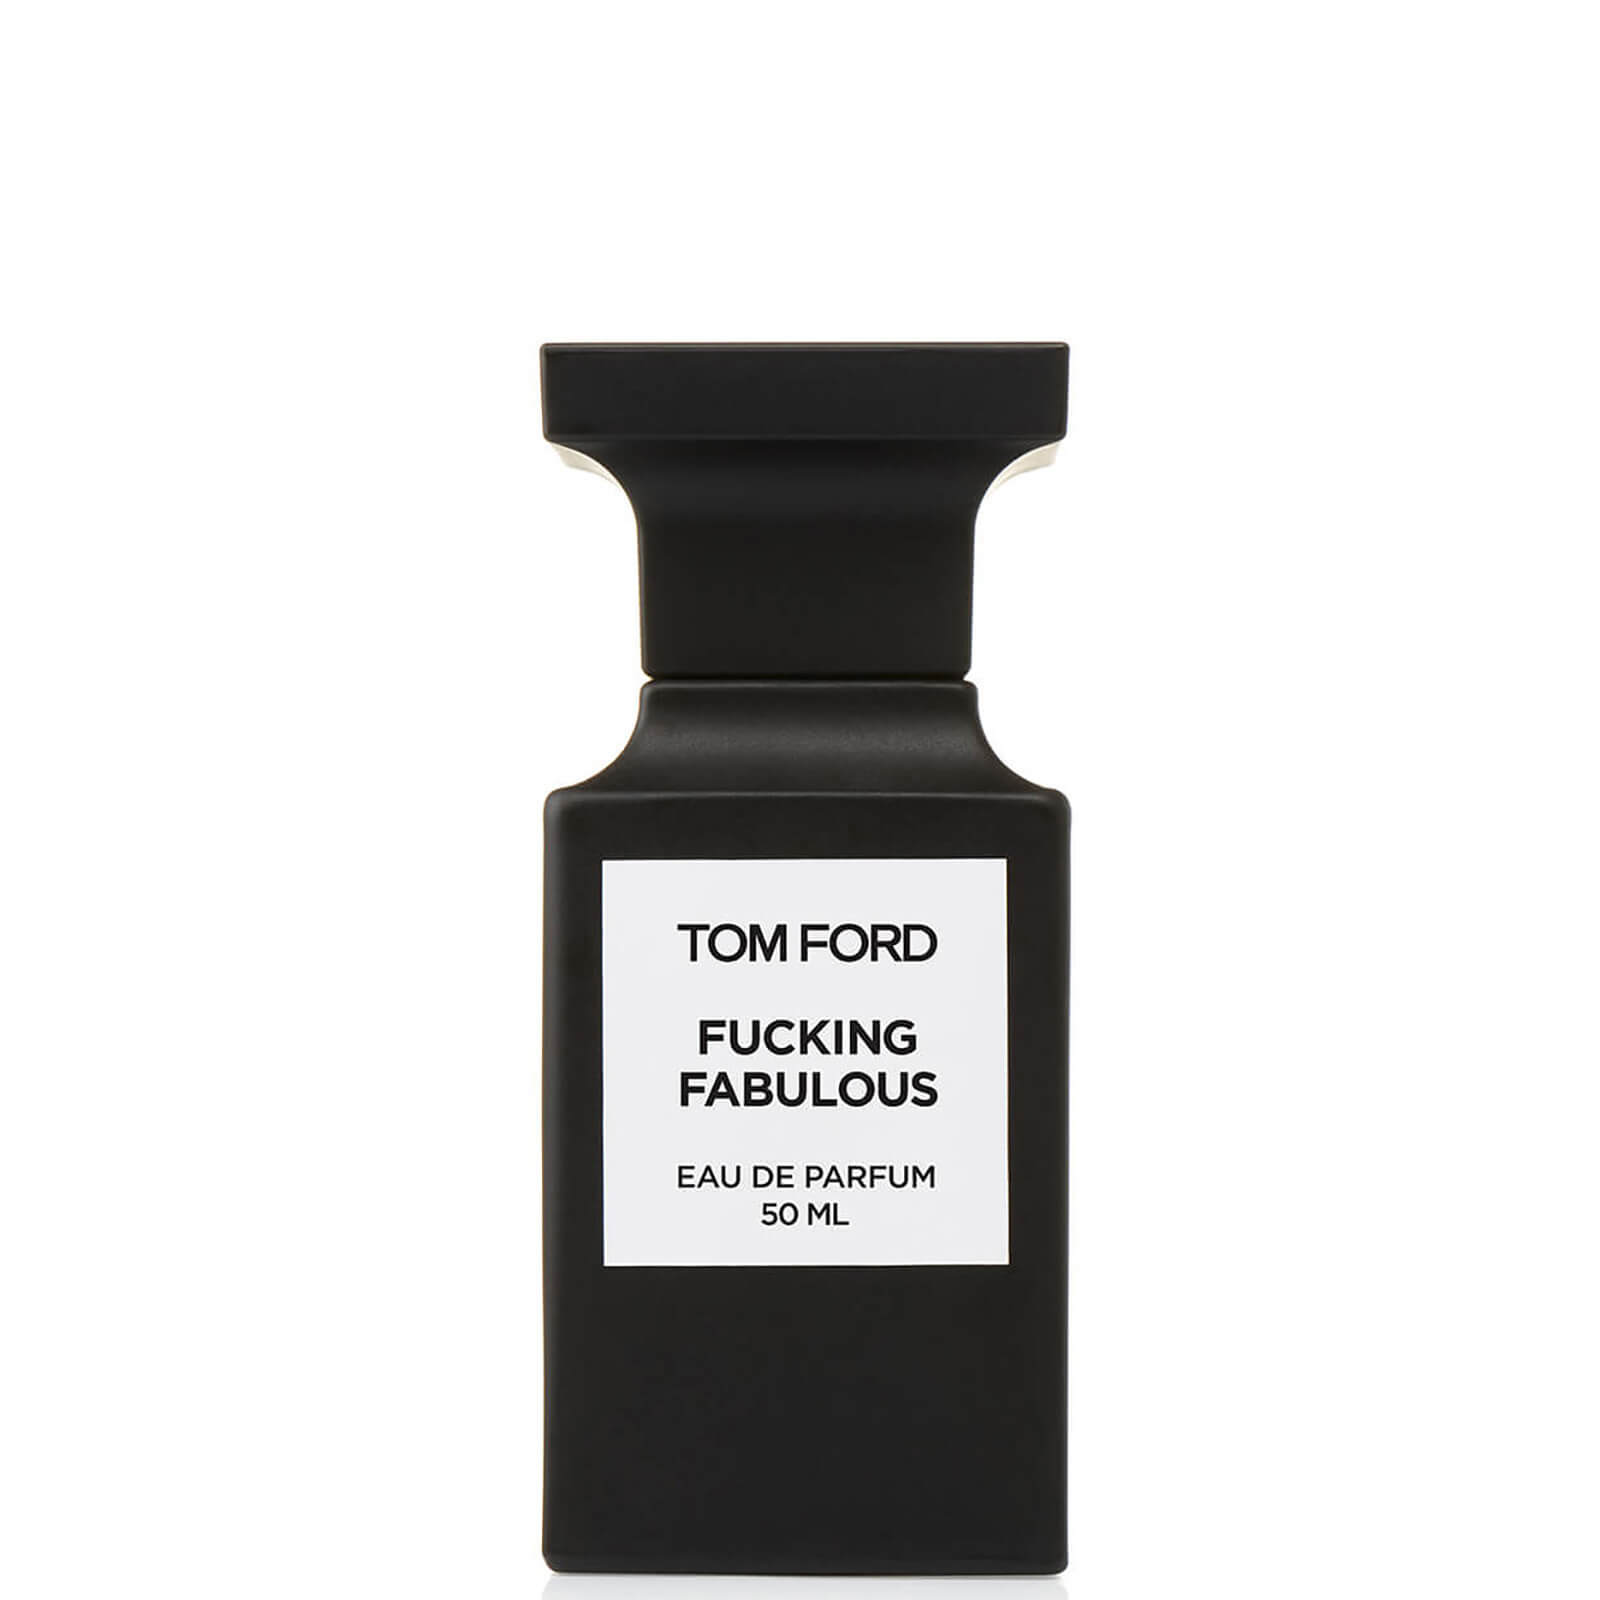 Photos - Women's Fragrance Tom Ford F***ing Fabulous -- Eau de Parfum Spray 50ml T615010000 